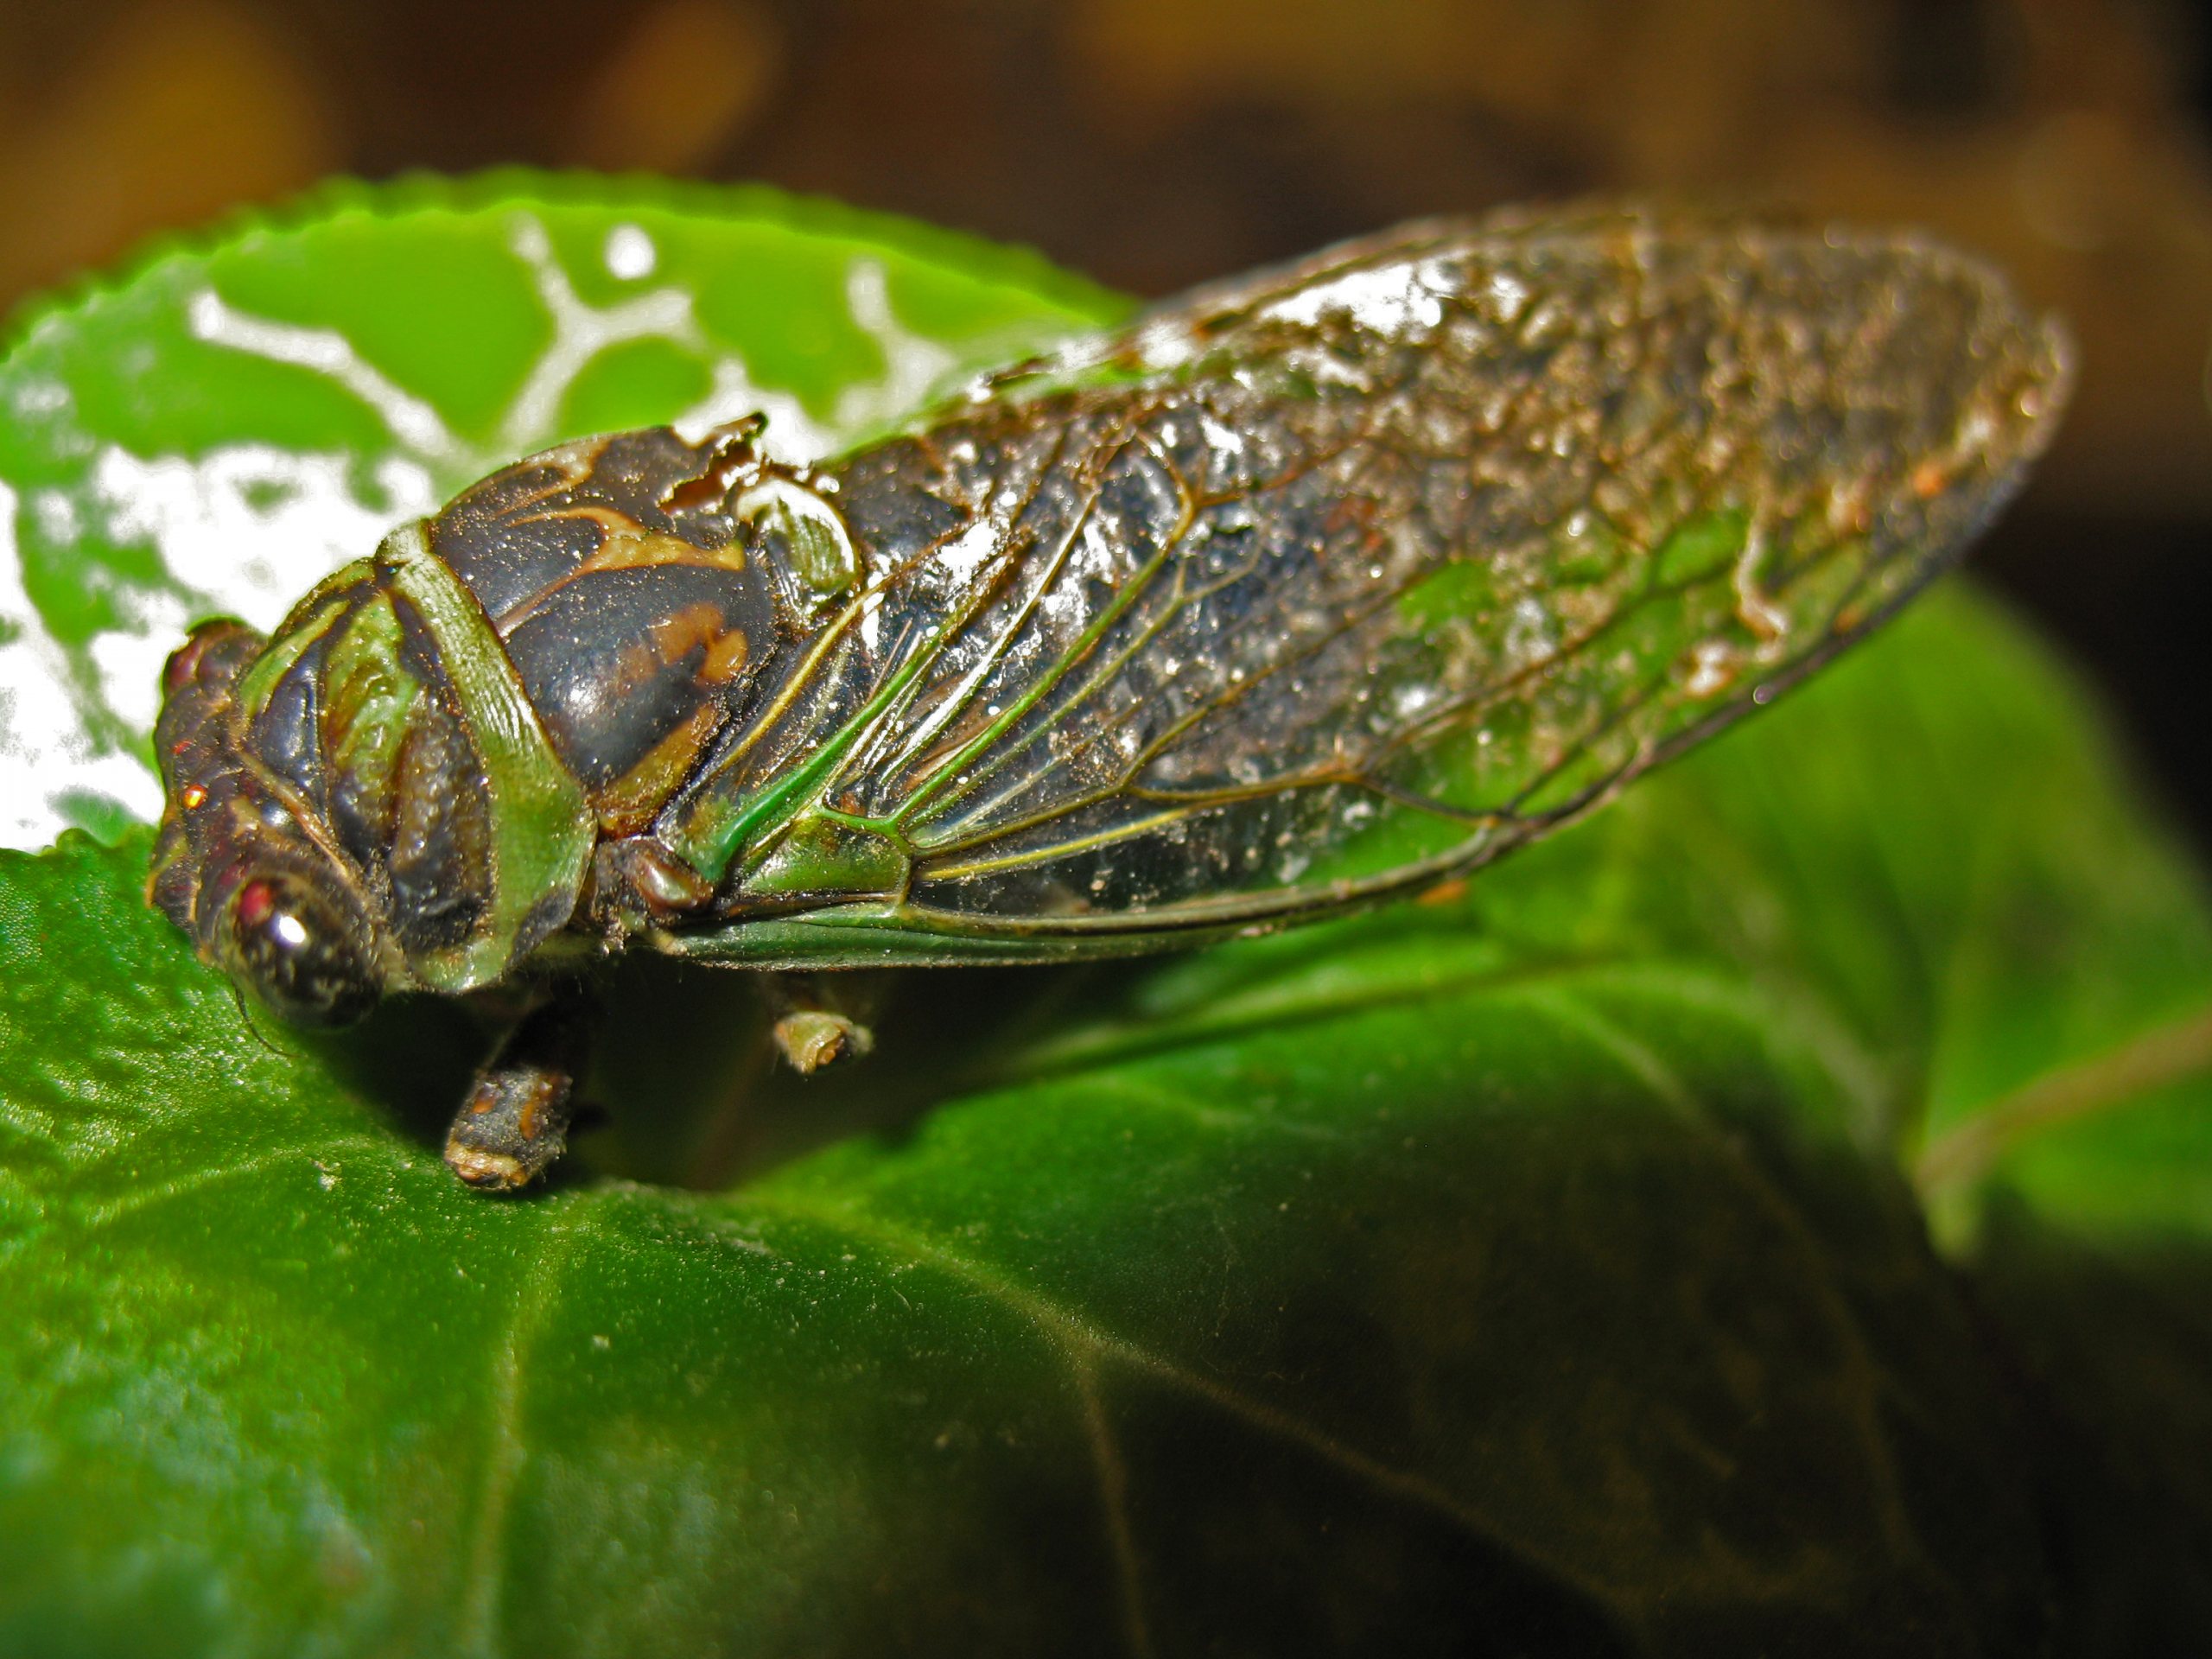 Adult annual cicada